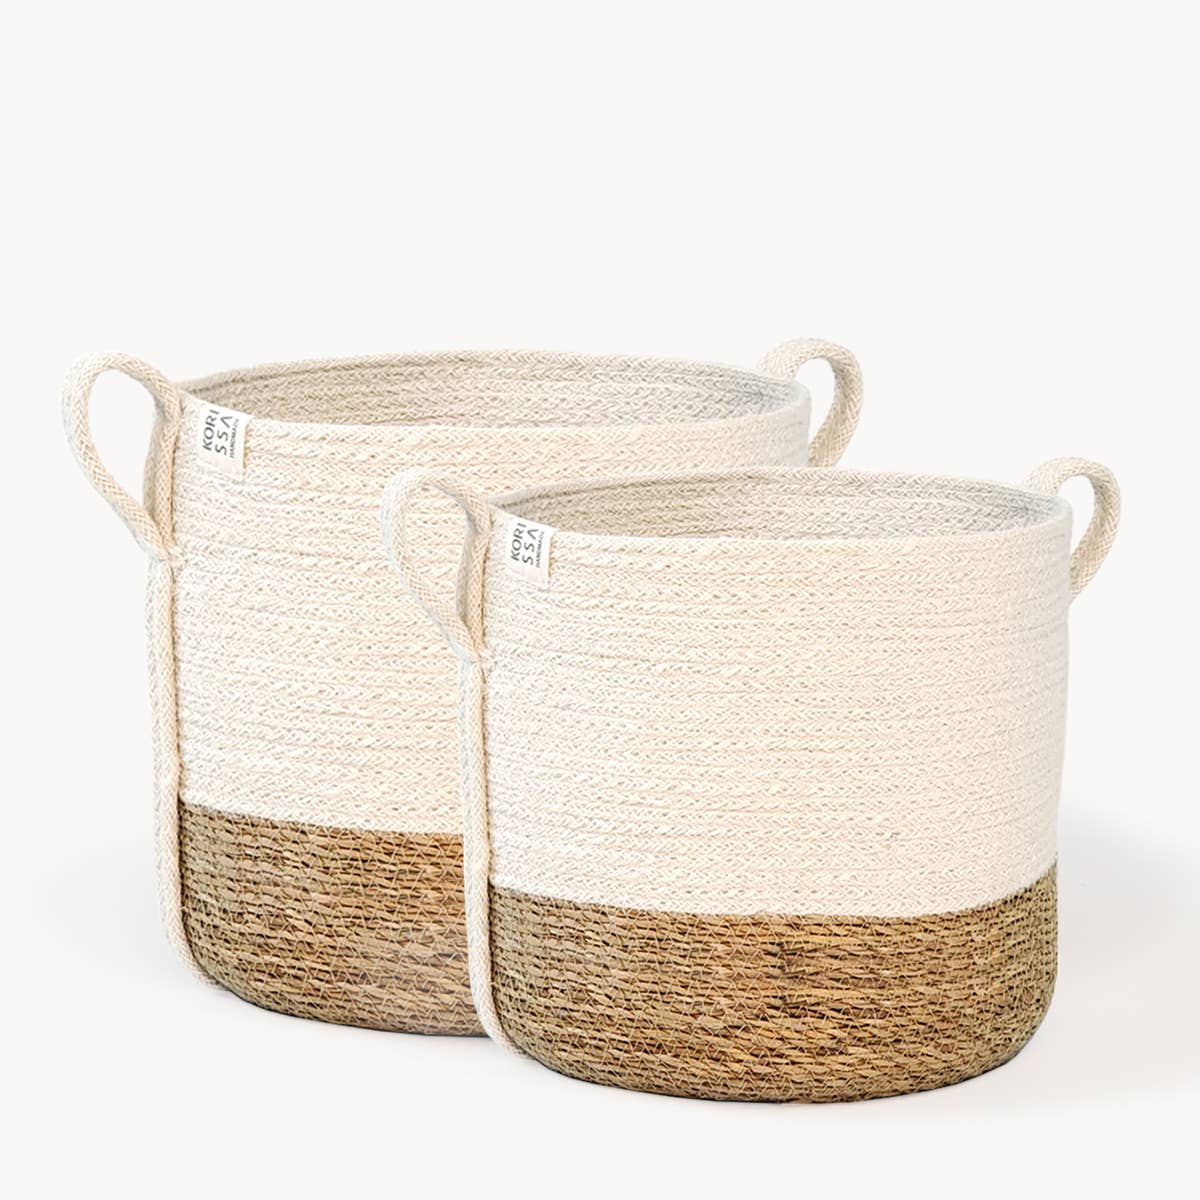 Savar colorblock storage baskets, set of 2, handmade in Bangladesh, color natural and white